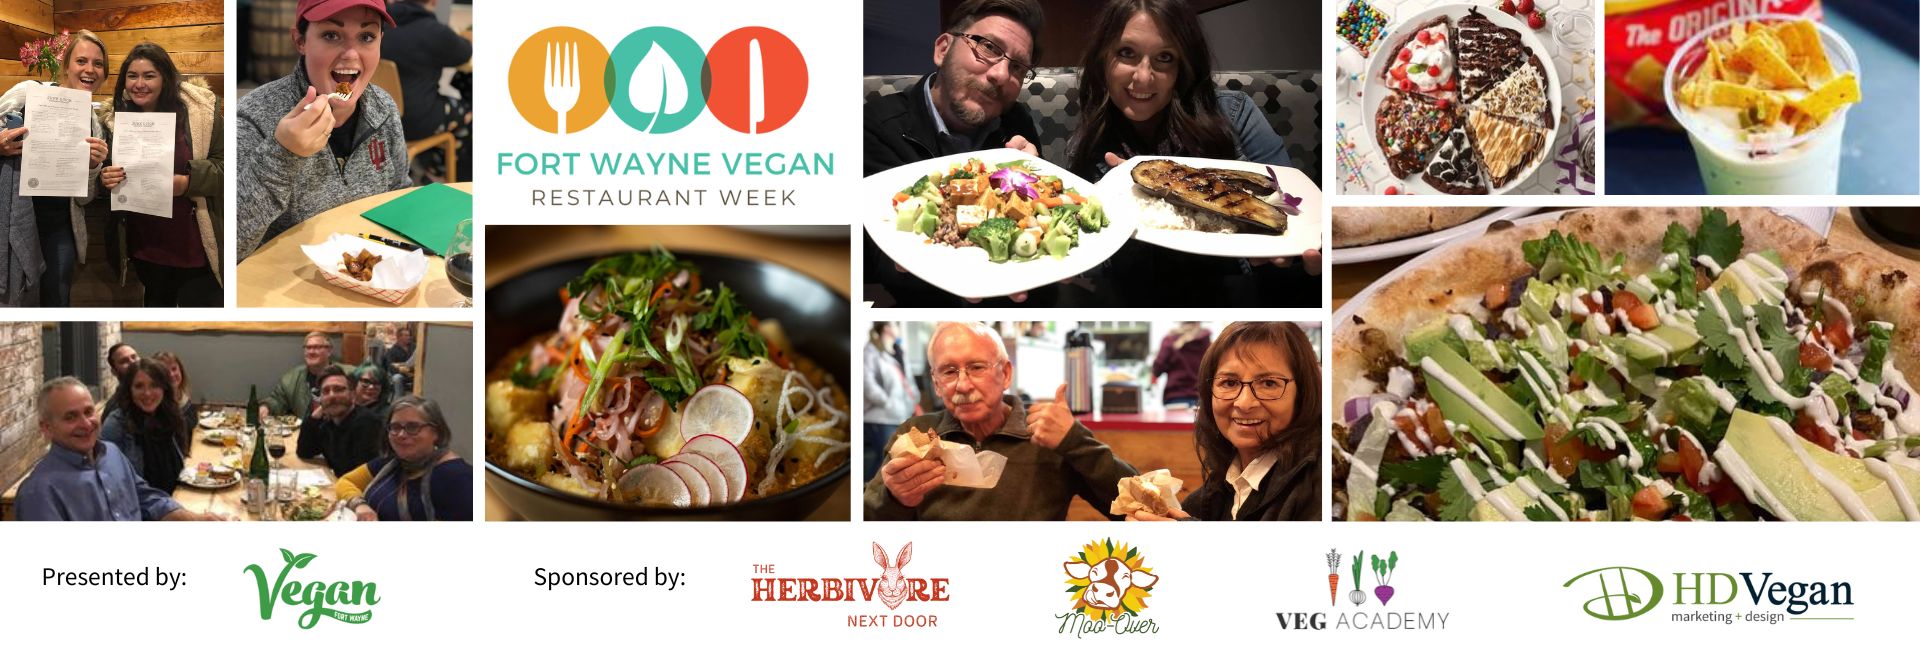 Fort Wayne Vegan Restaurant Week